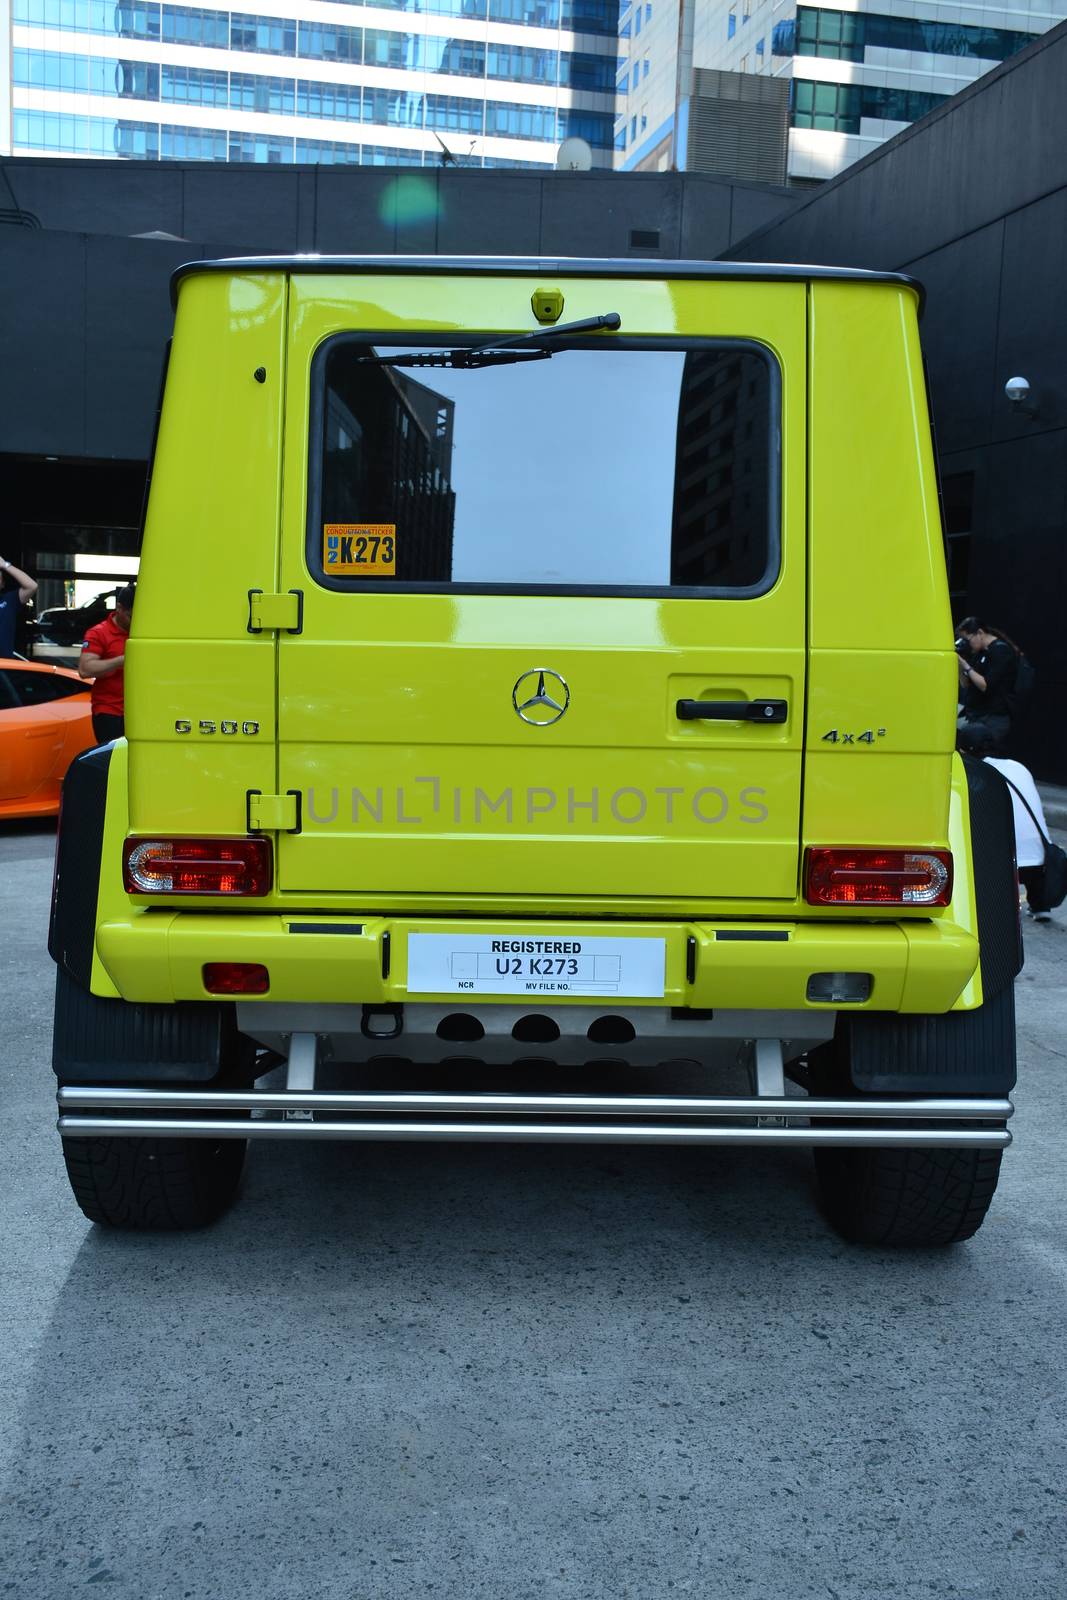 Mercedes Benz g63 in Bonifacio Global City, Taguig, Philippines by imwaltersy